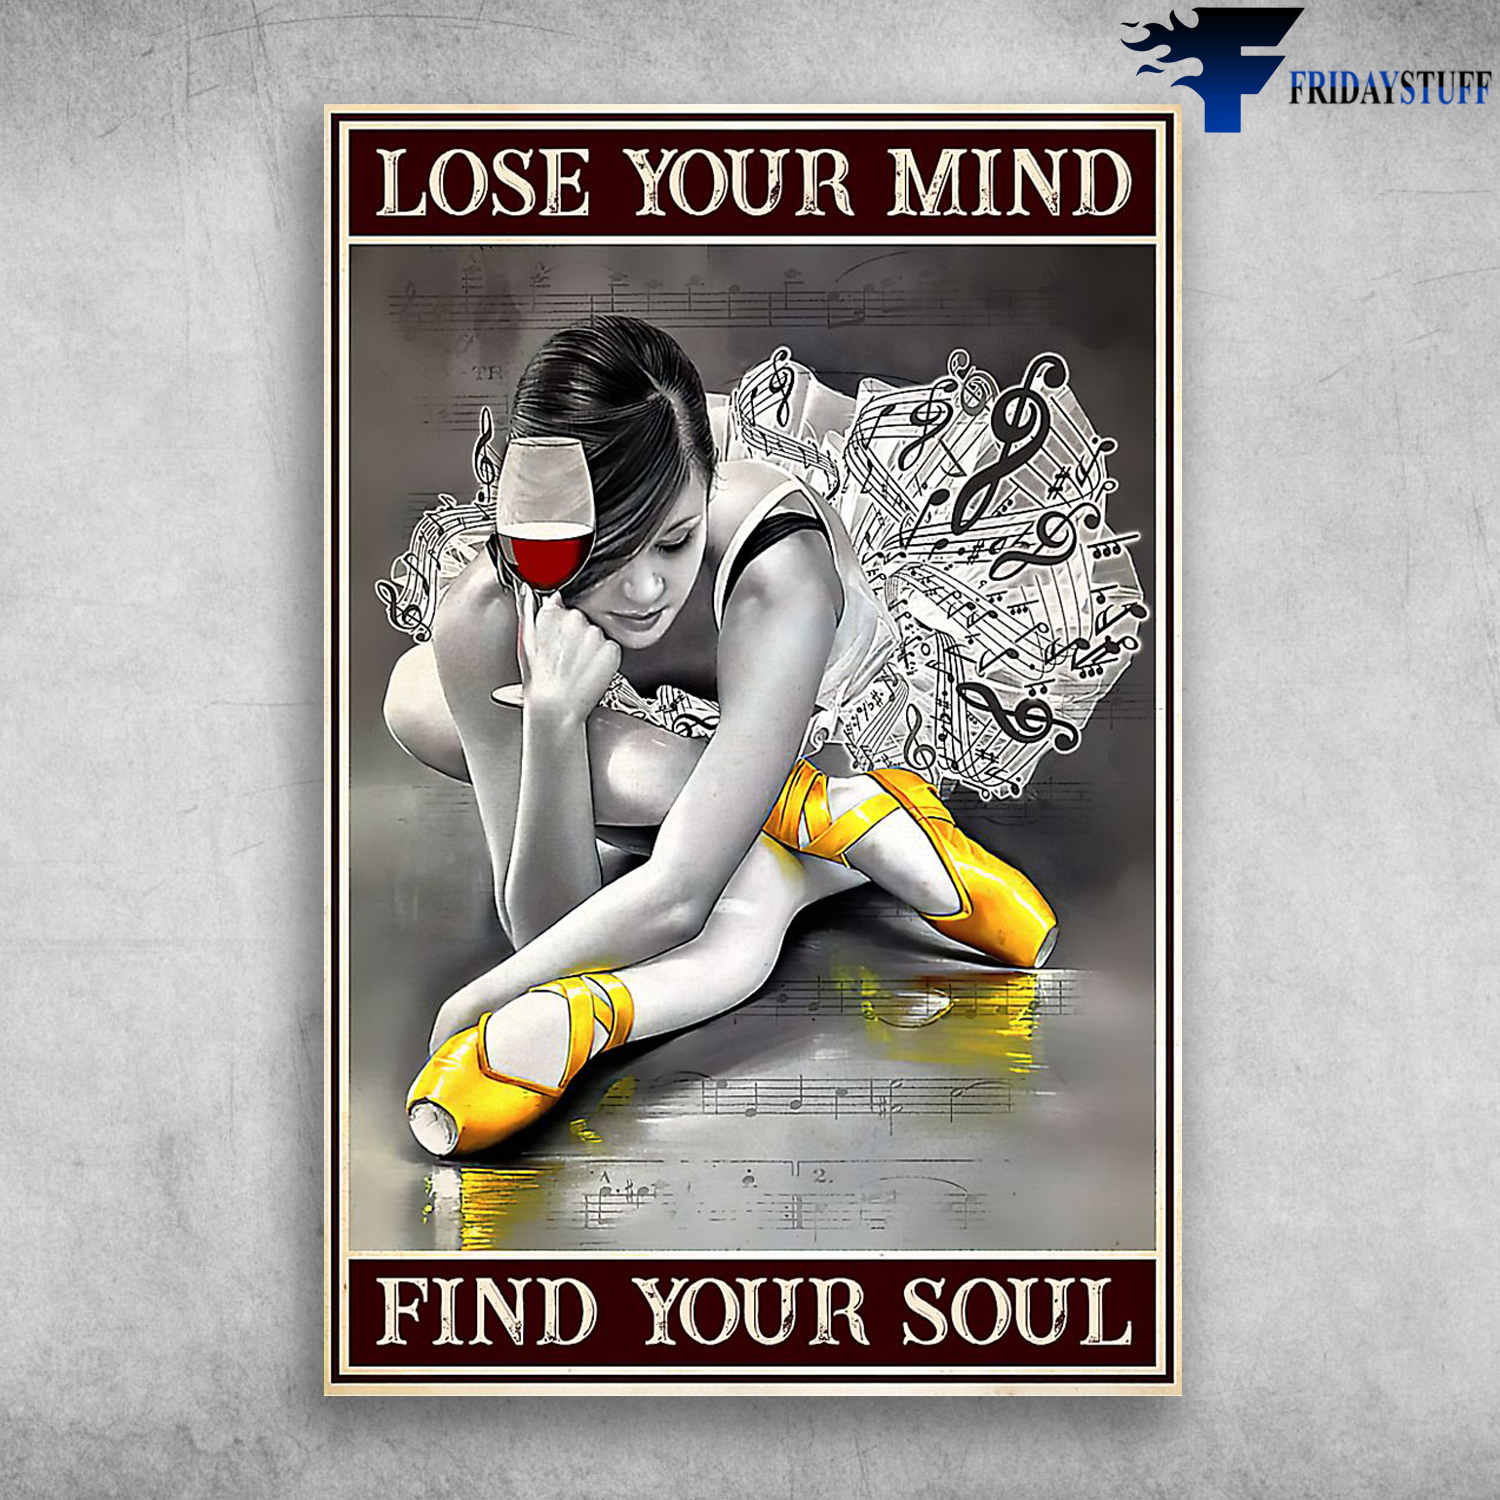 Ballet Dancer, Cup Of Wine, Gold Shoe - Lose Your Mind, Fine Your Soul